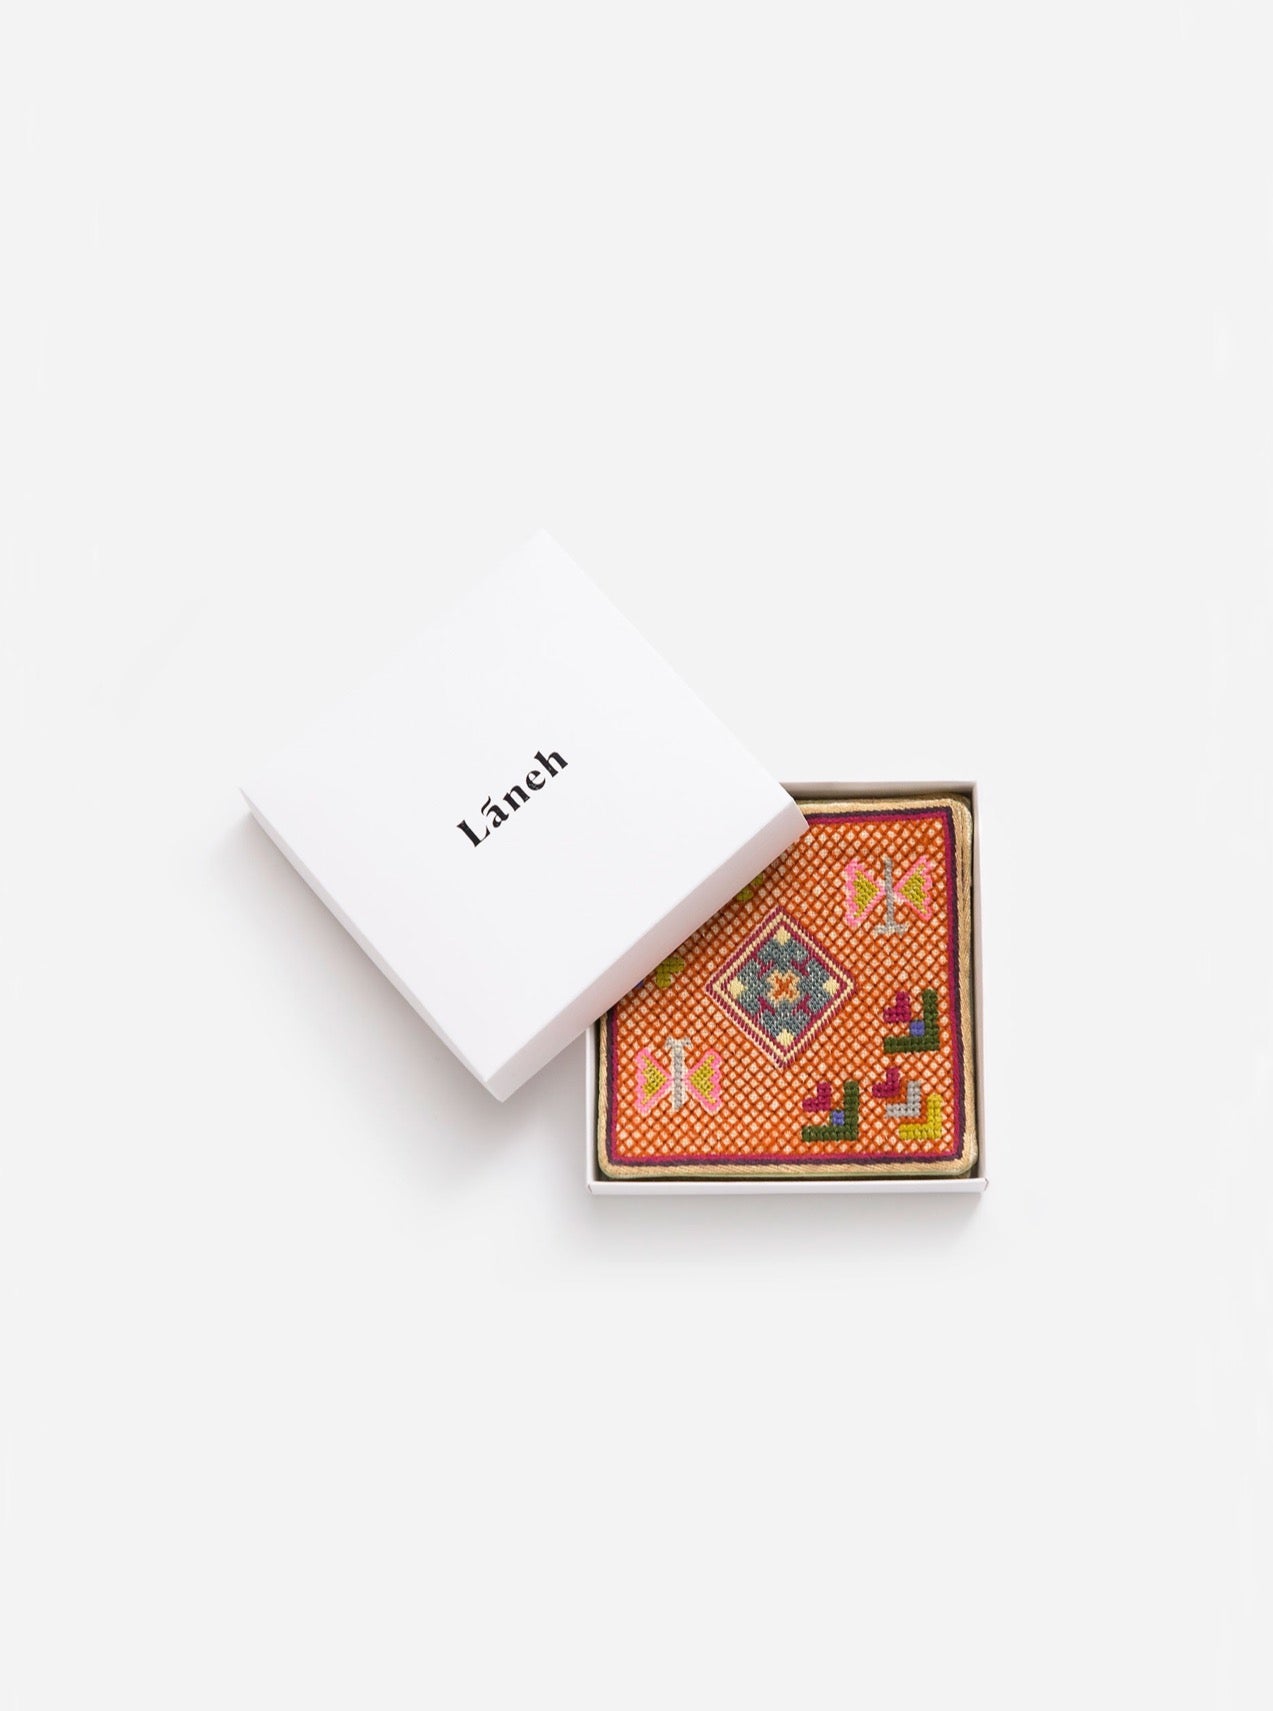 Tangerine orange Persian Garden coaster set with Baluchi embroidery inside a white Laneh box